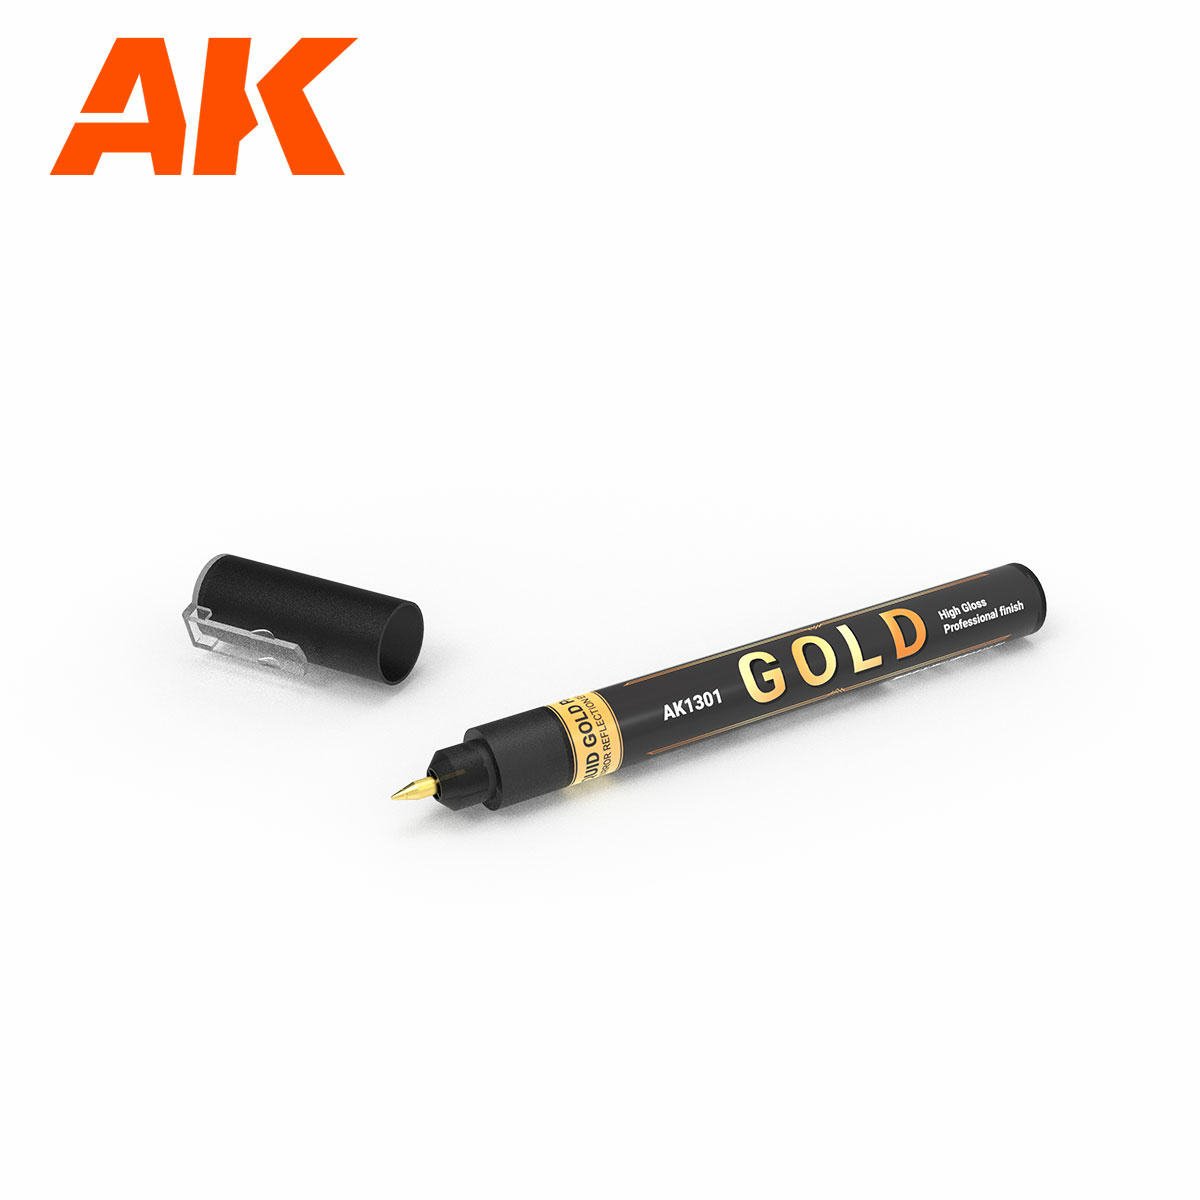 AK1301 AK Interactive Жидкий маркер металлик - Золотой / Metallic Liquid Marker - Gold